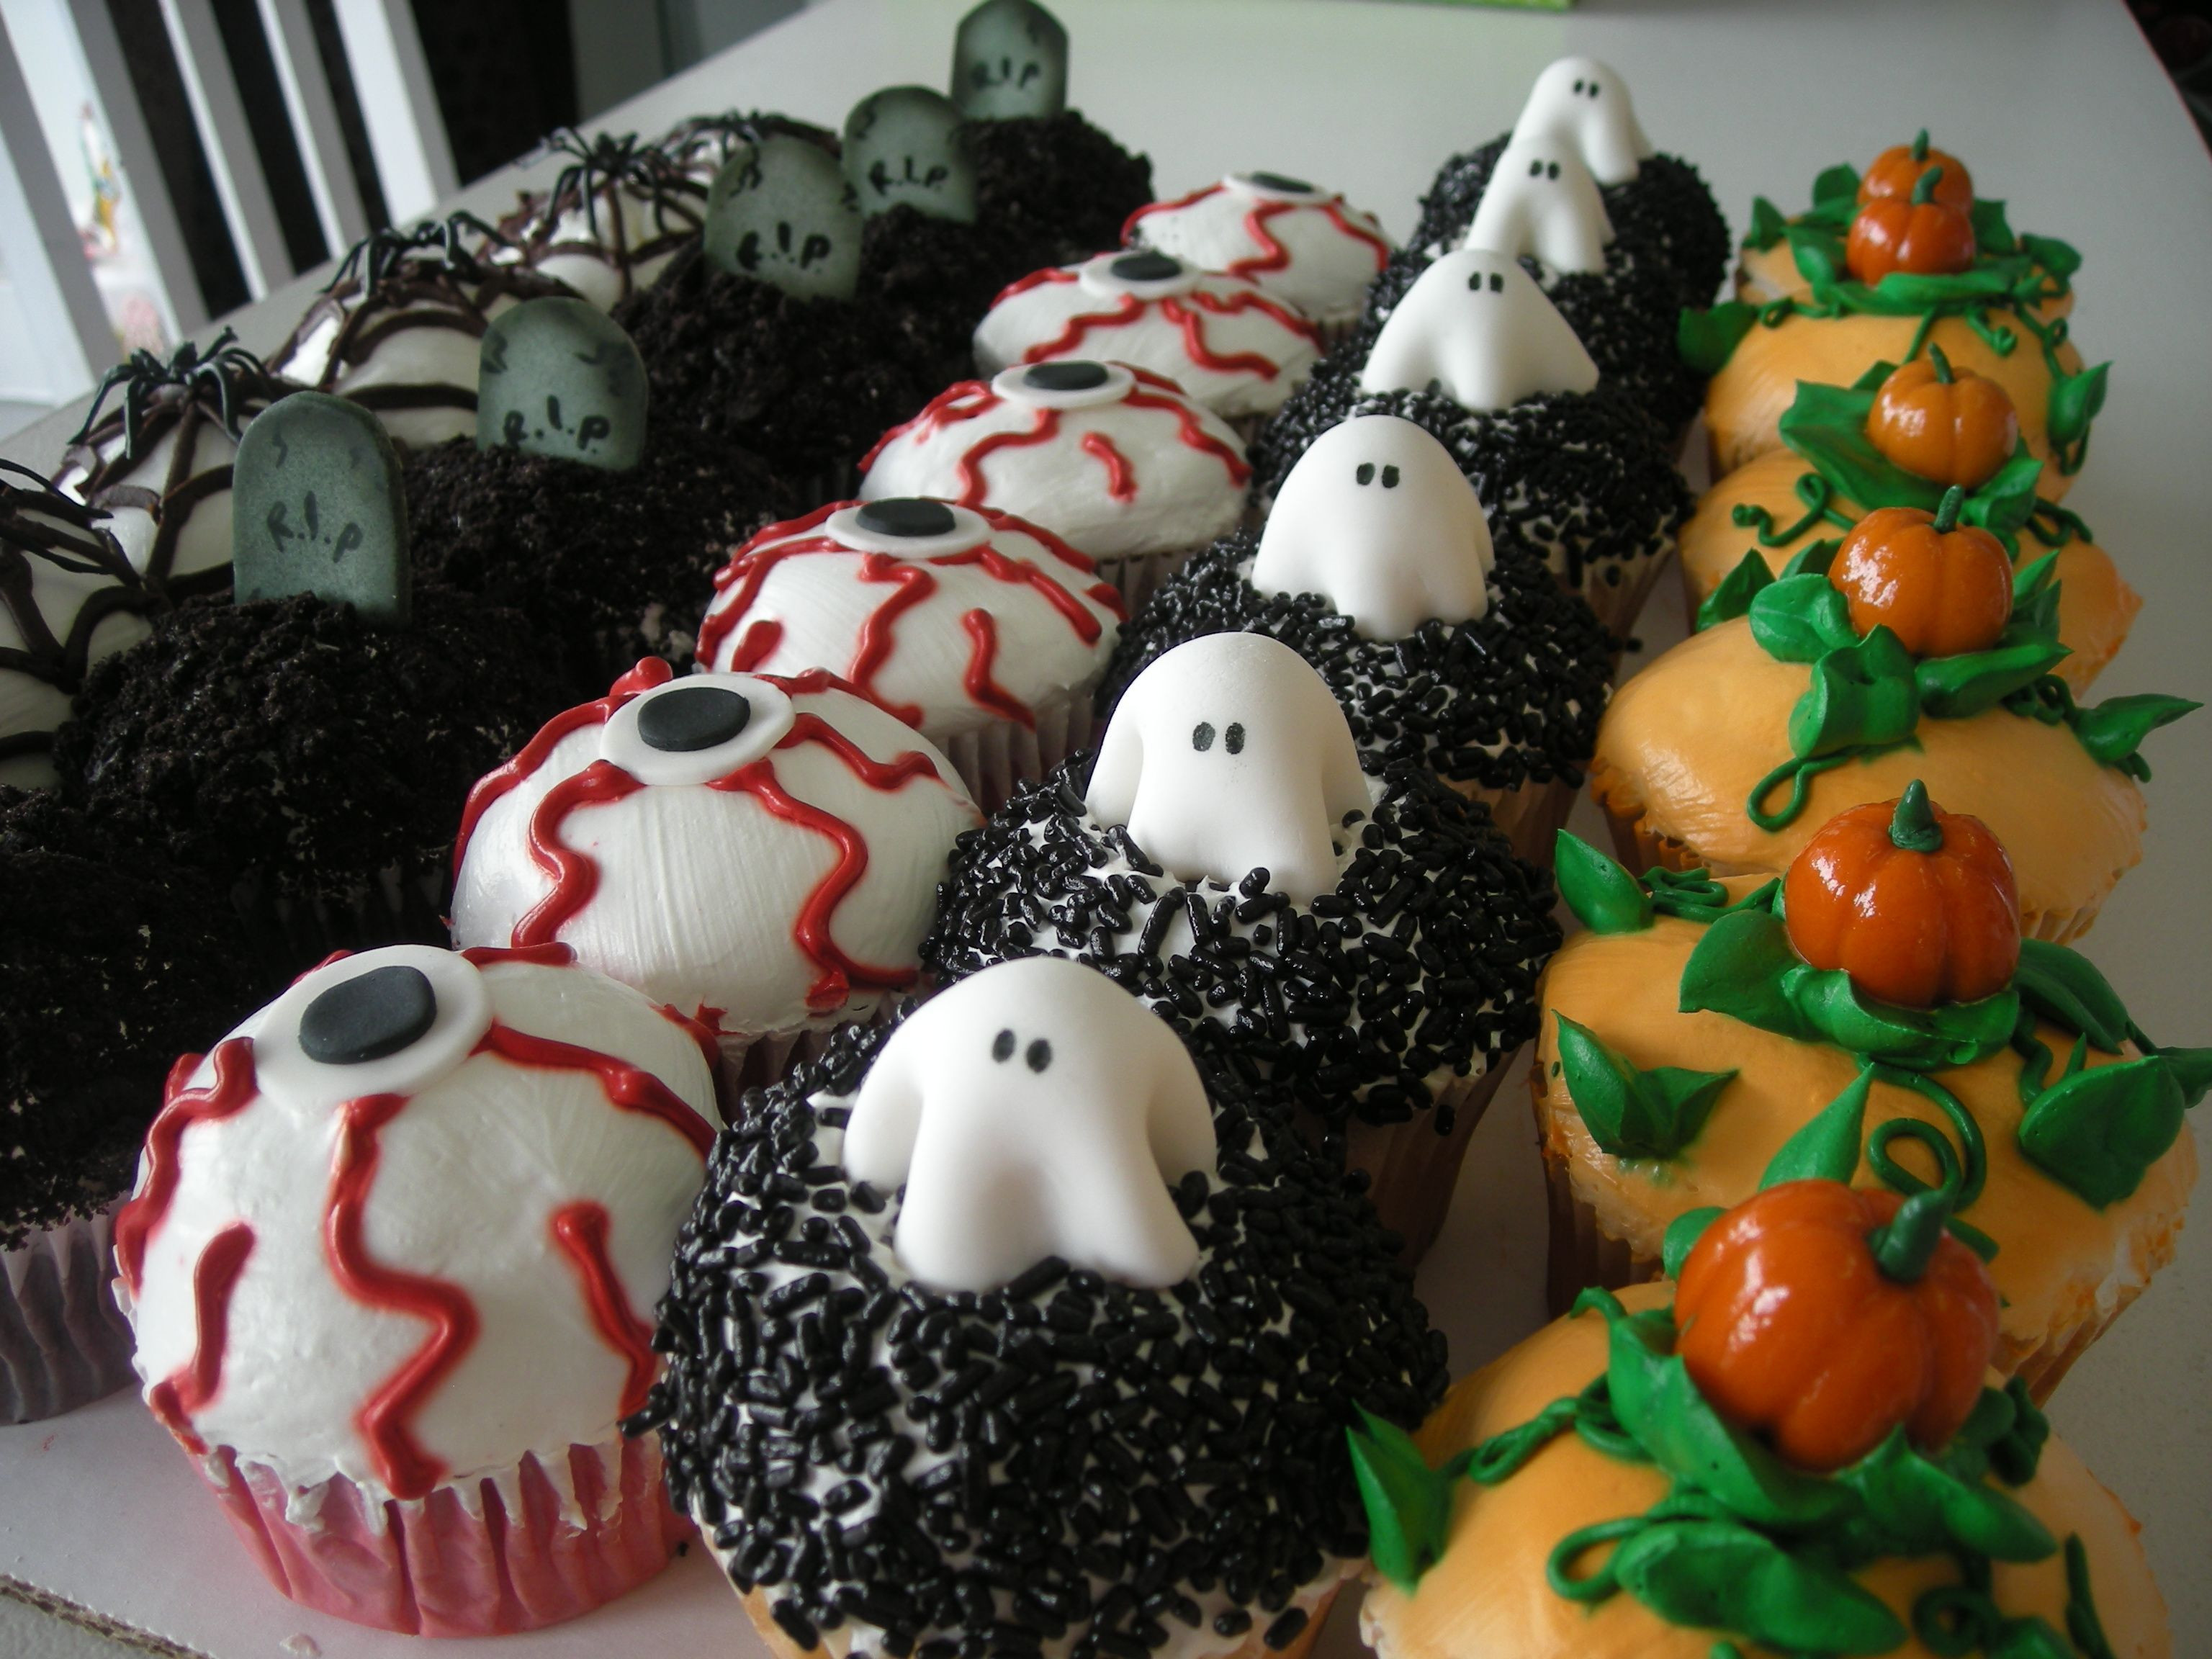 Cool Halloween Cupcakes
 National Cupcake Week